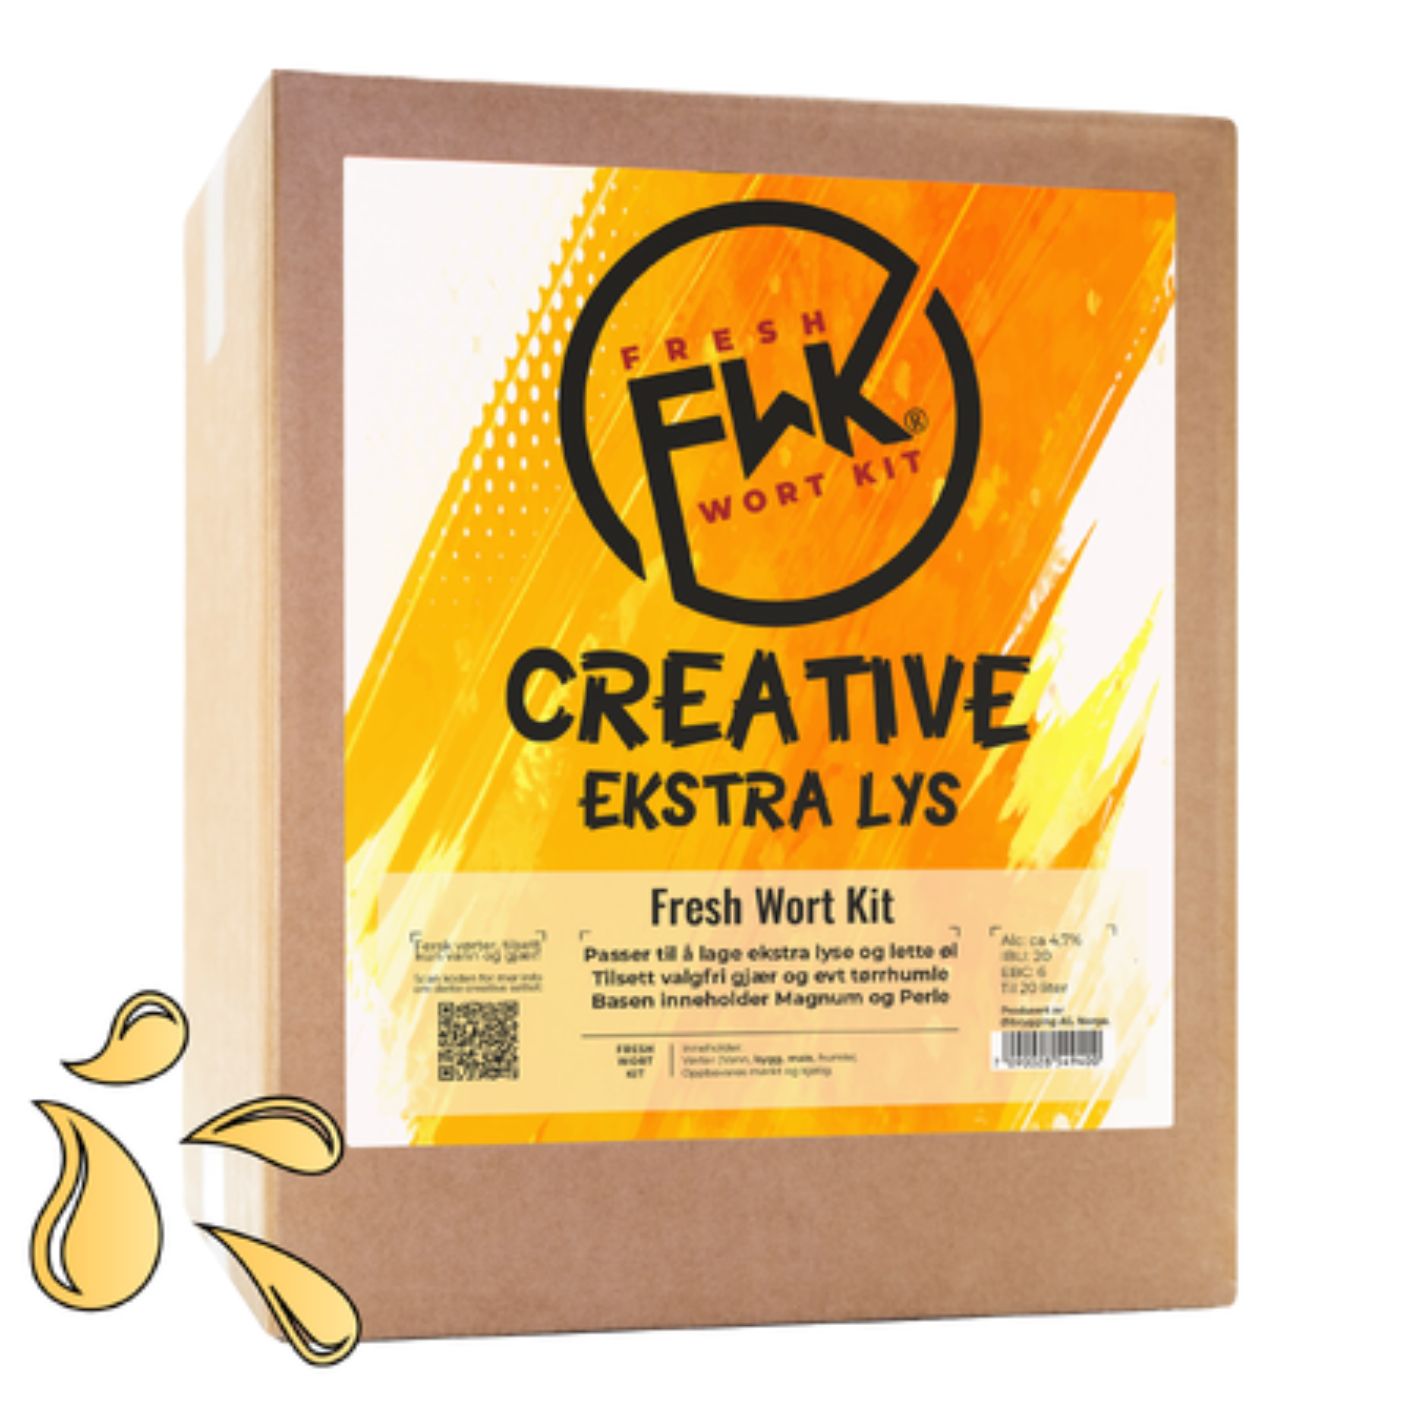 FWK Creative Ekstra Lys Fresh Wort Kit